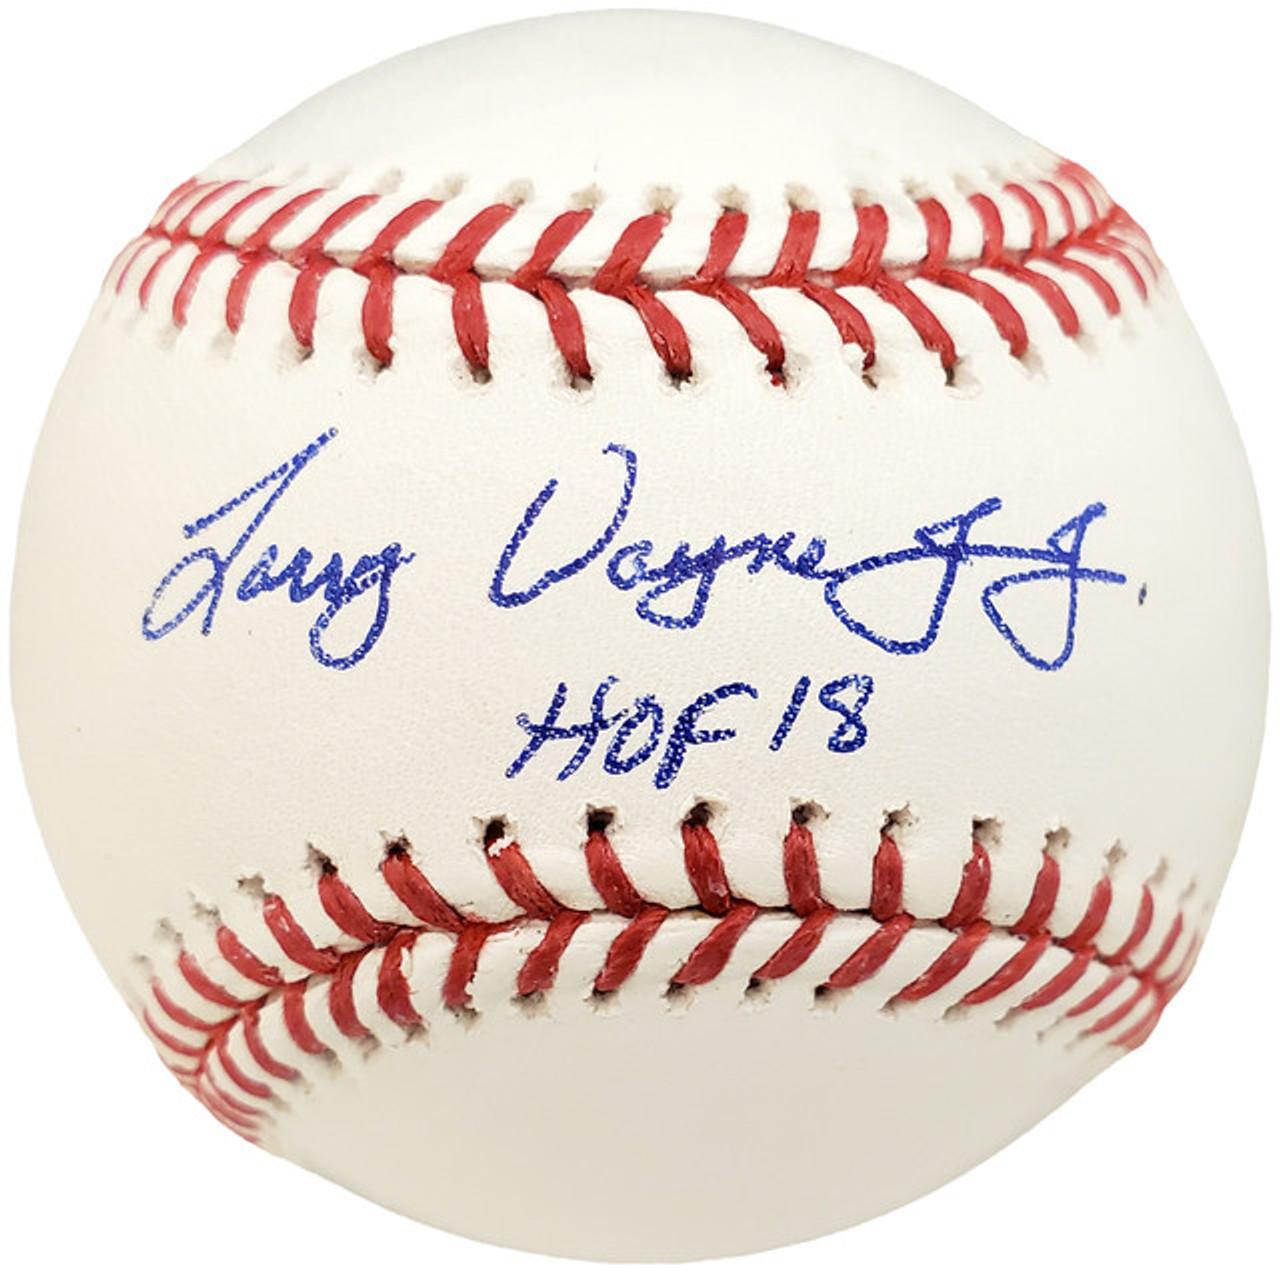 Steve Carlton Philadelphia Phillies Autographed Baseball with ''MLB Debut 4-12-65'' Inscription